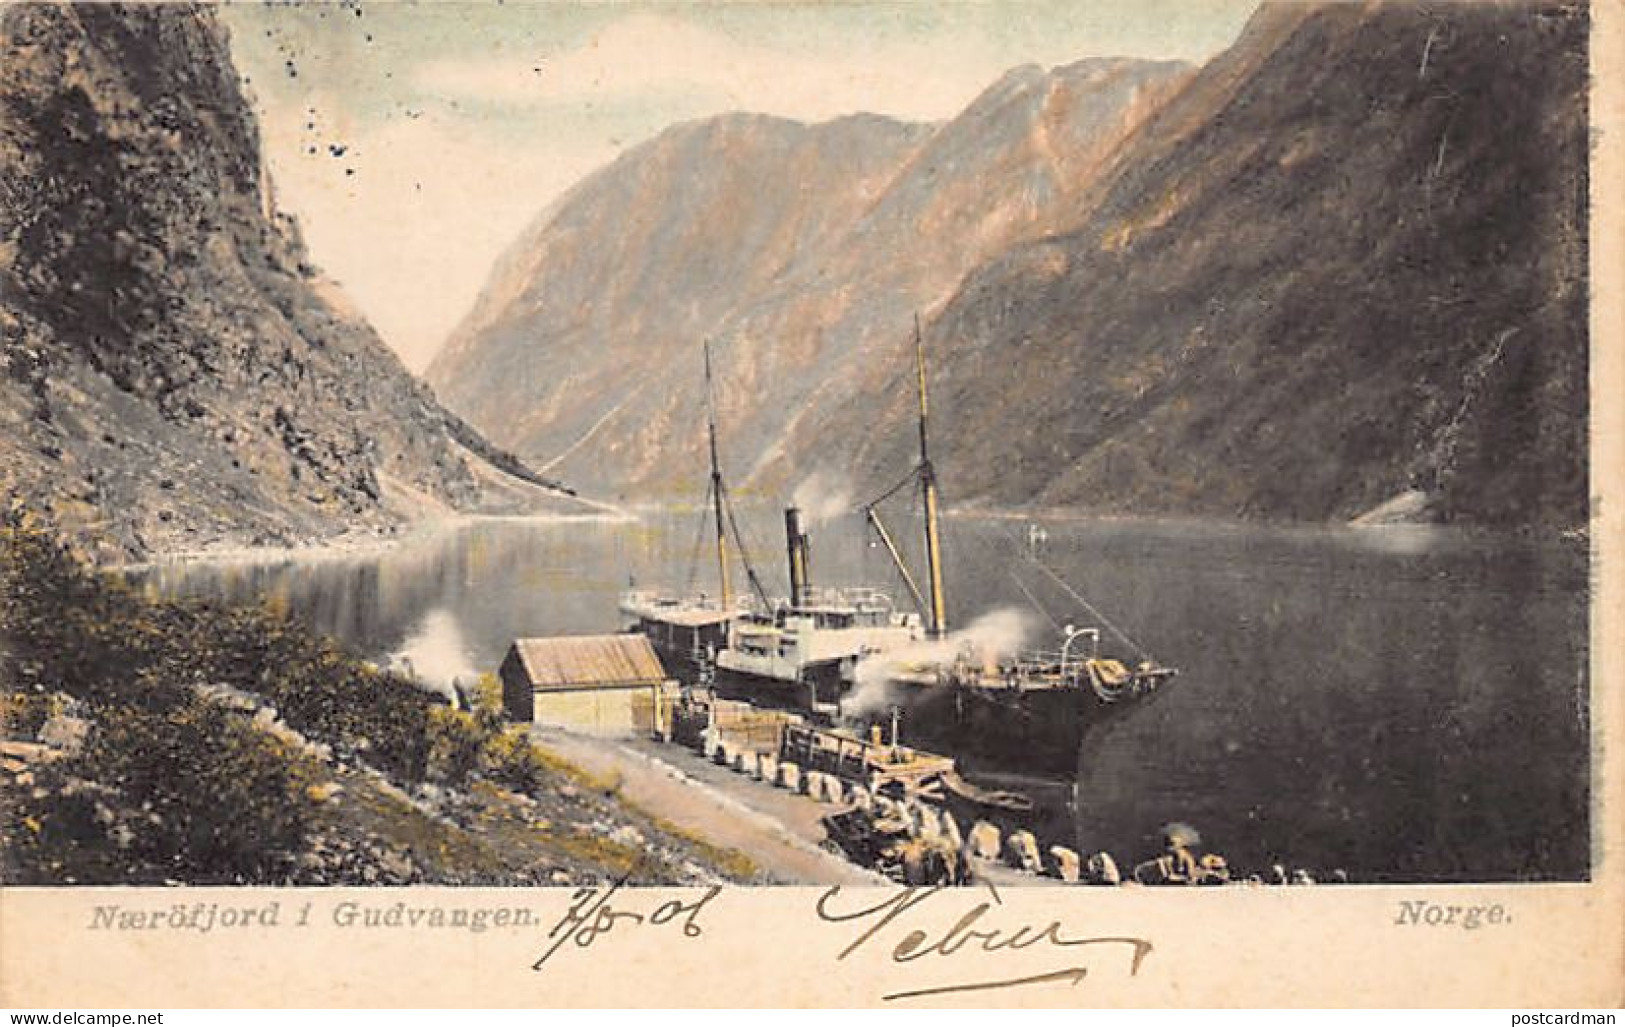 NORWAY - Naeröfjord I Gudvangen - Publ. A. B. Oscar E. Kulls 484 - Norway